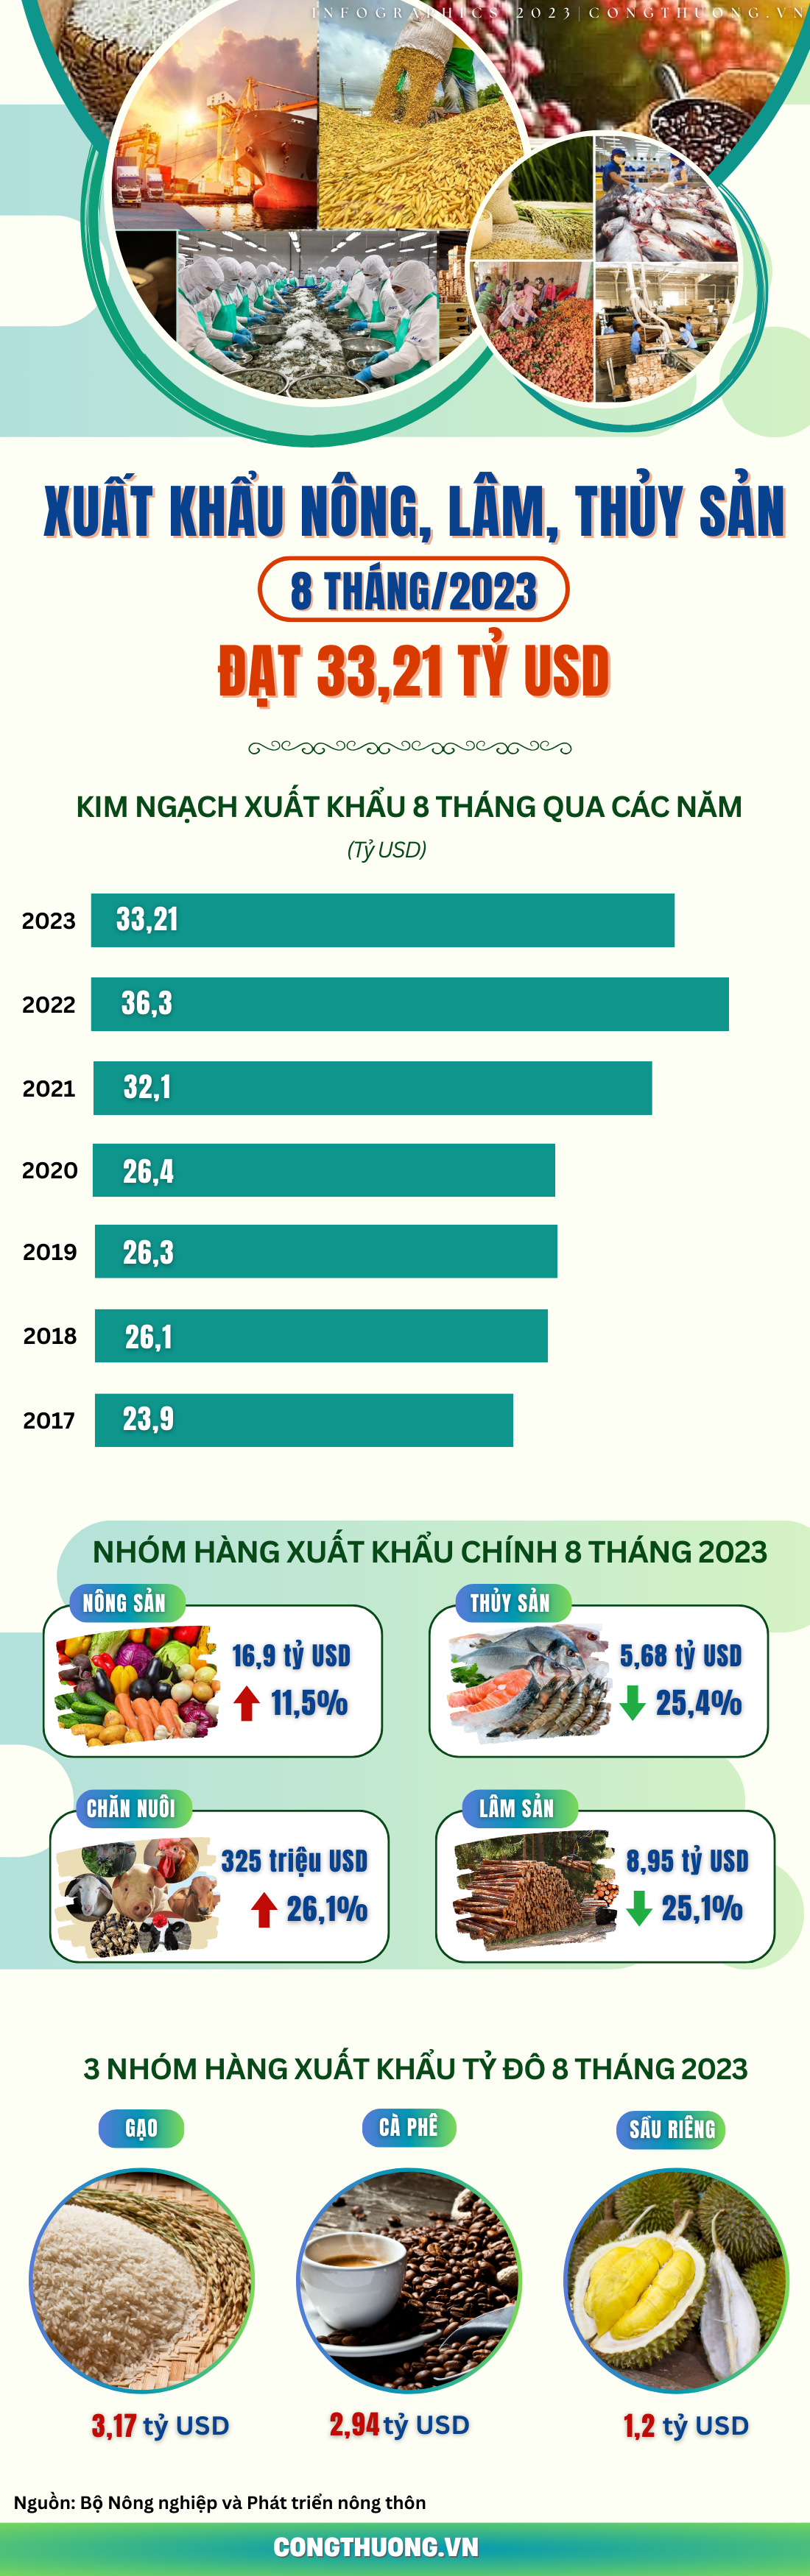 infographics 8 thang dau nam 2023 xuat khau nong lam thuy san dat gan 3321 ty usd